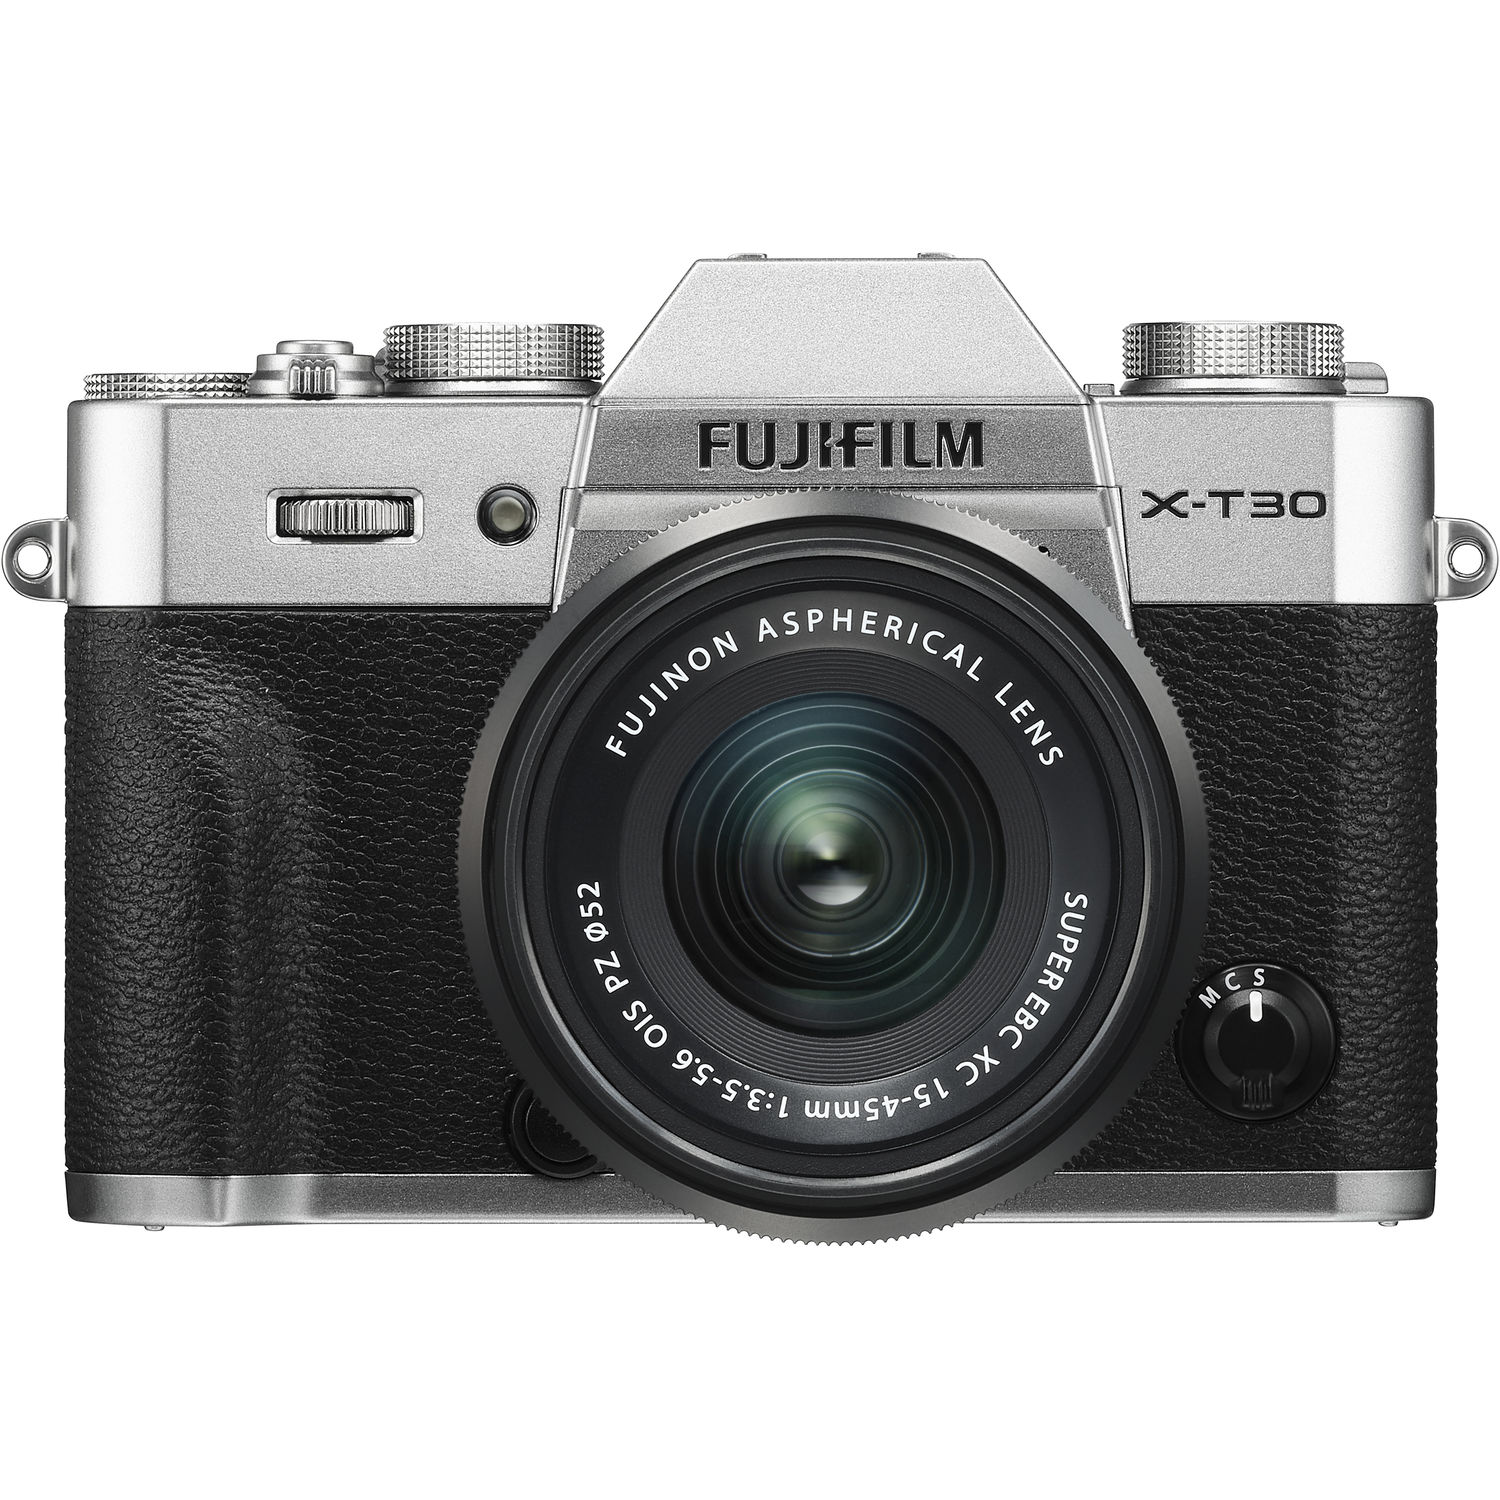 Fujifilm X-T30 Mirrorless Digital Camera with 15-45mm F3.5-5.6 OIS PZ Lens (Silver)